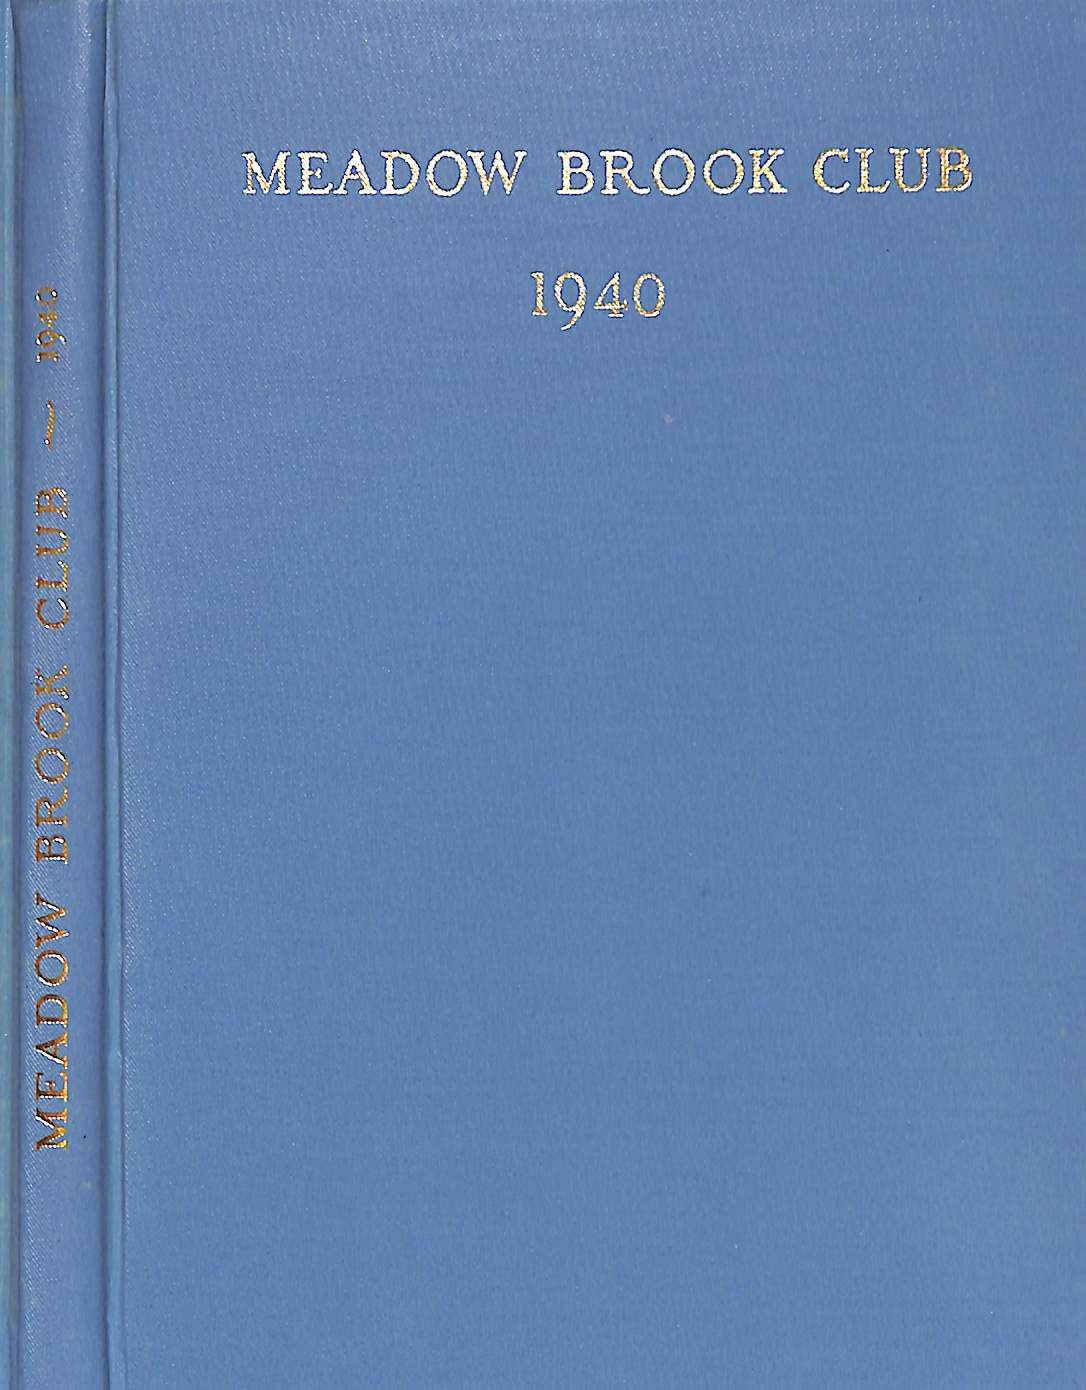 "Meadow Brook Club M.B.H. Year Book" 1940